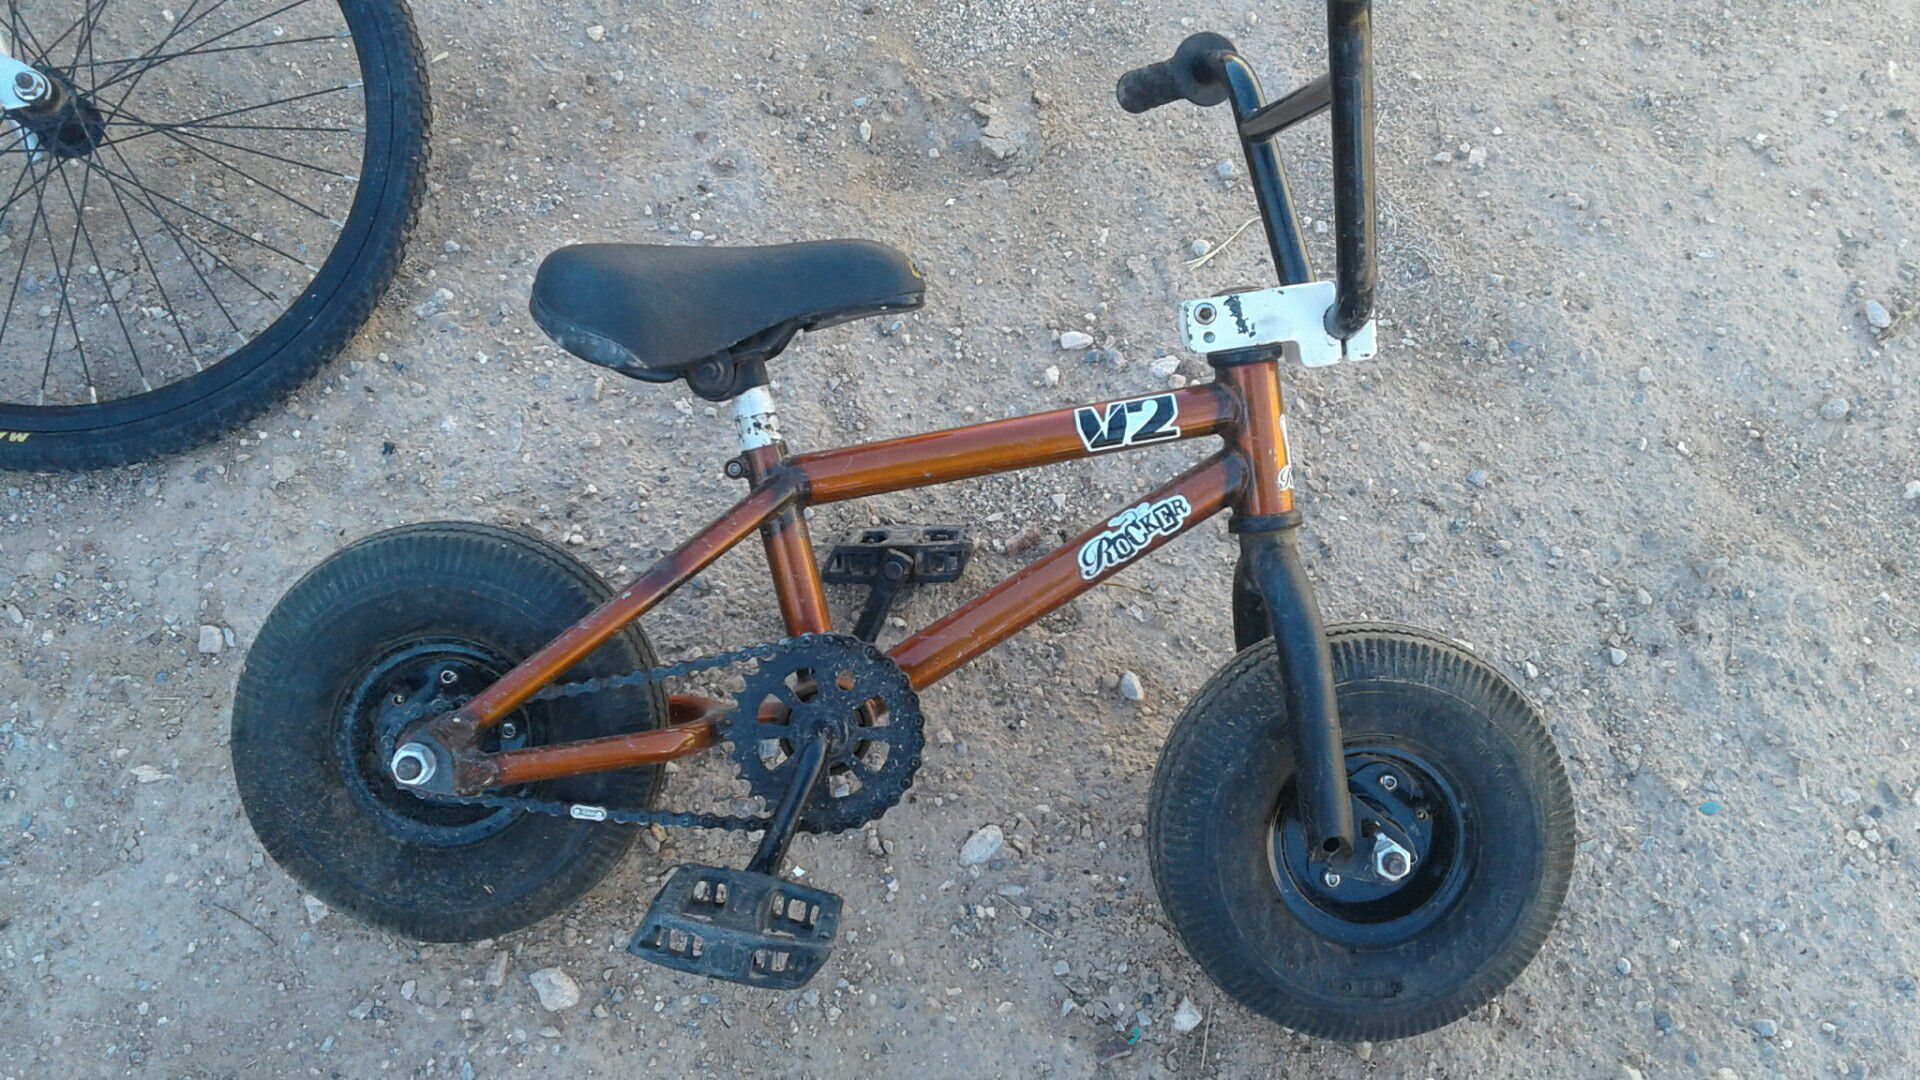 V2 rocker big wheel mini bmx park bike